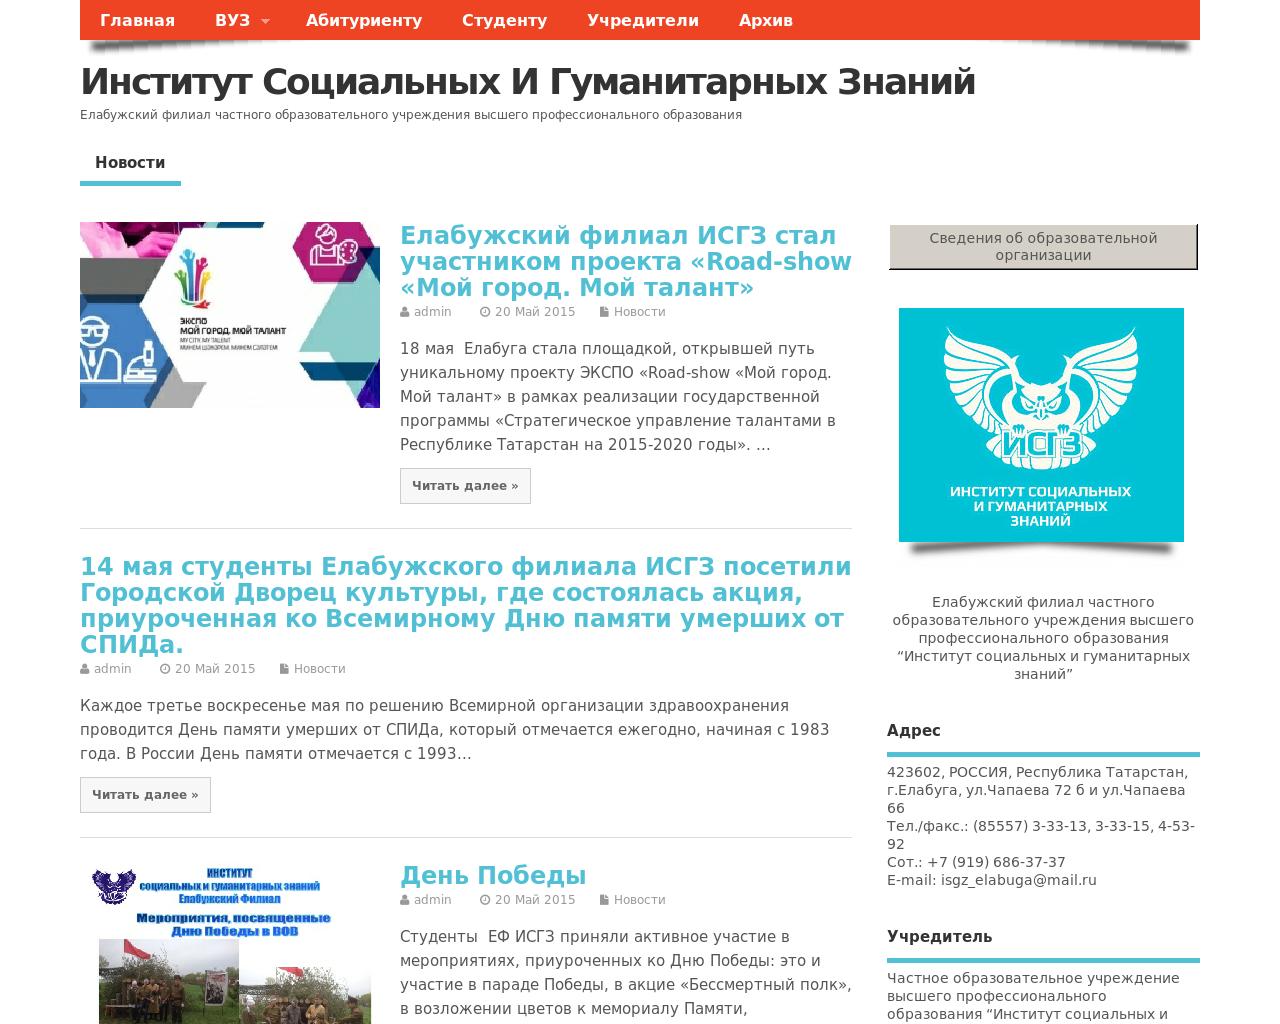 Изображение сайта ef-isgz.ru в разрешении 1280x1024